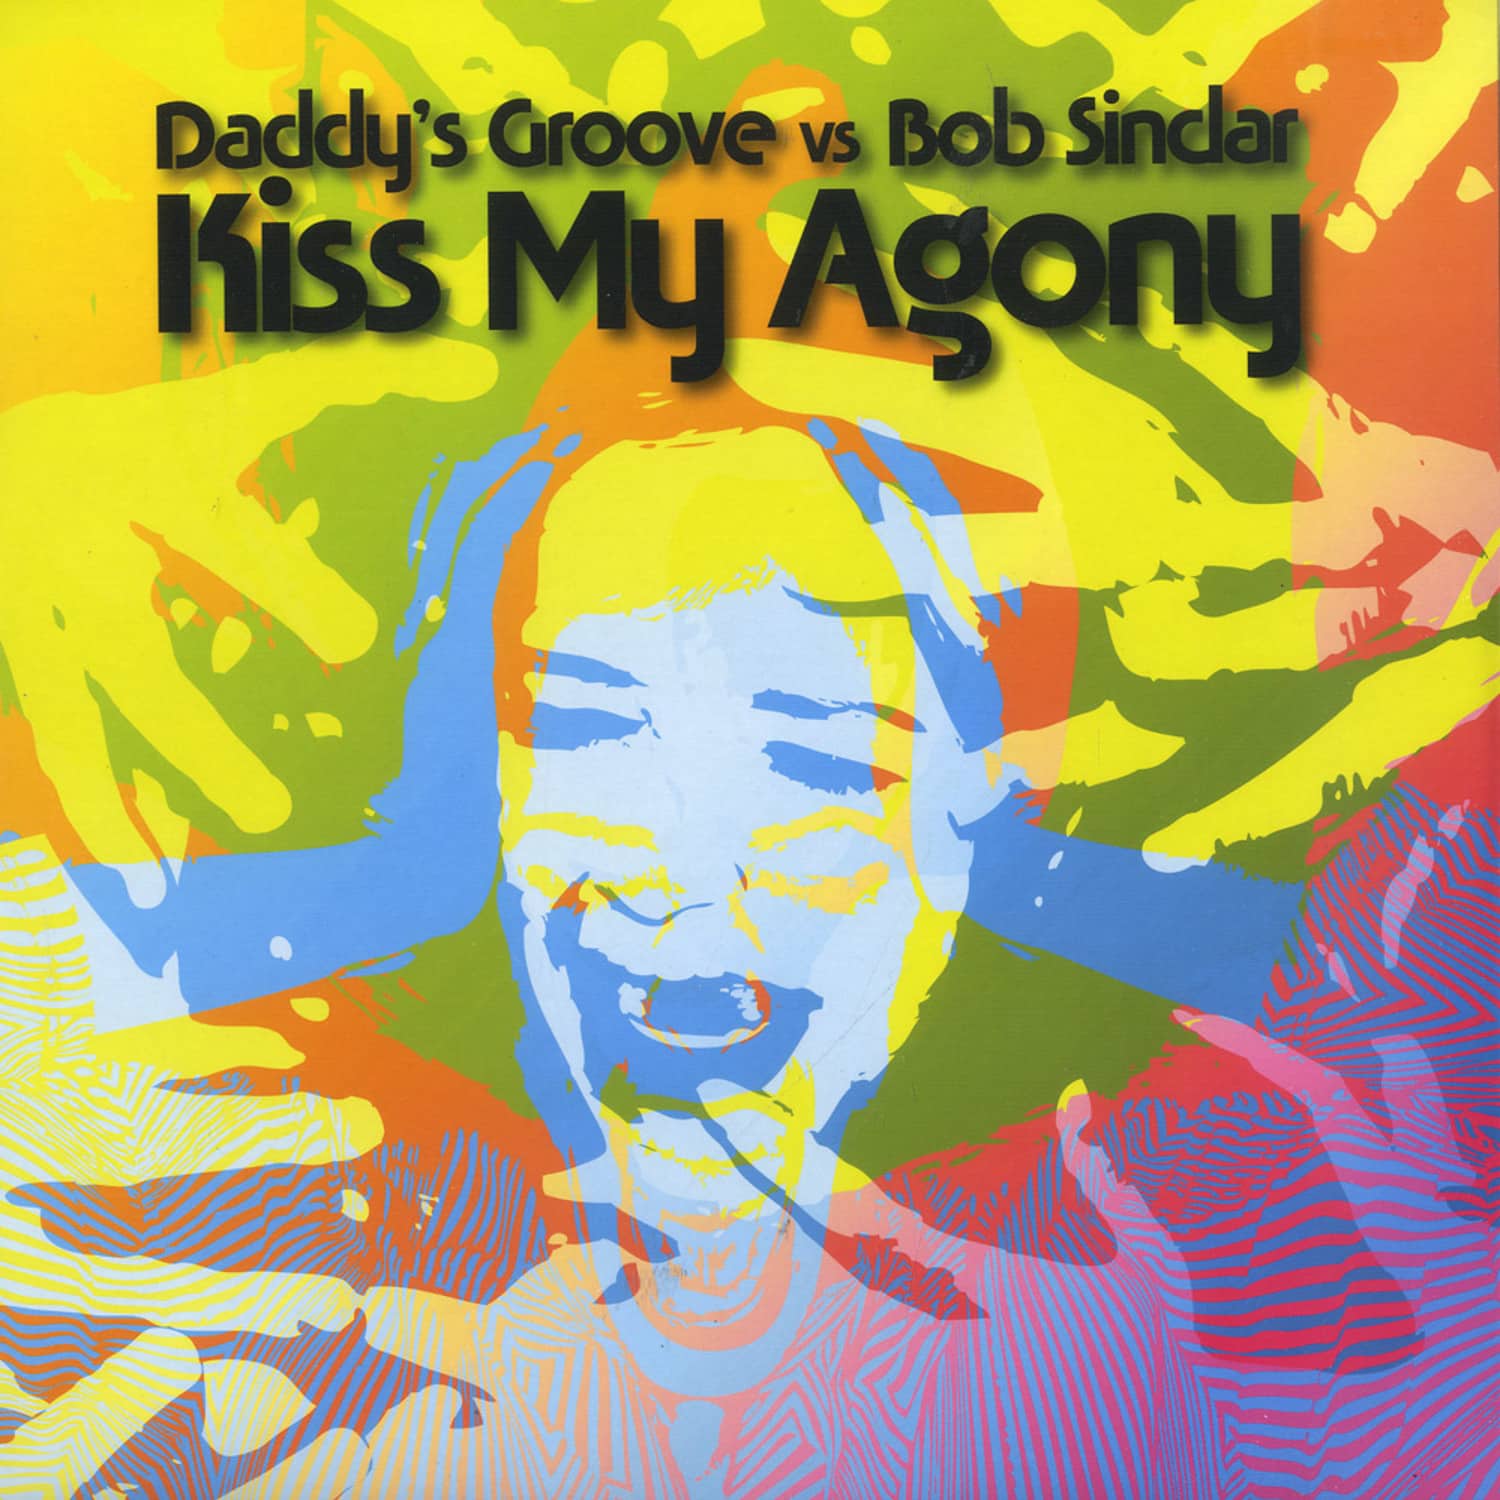 Daddys Groove vs Bob Sinclar - KISS MY AGONY